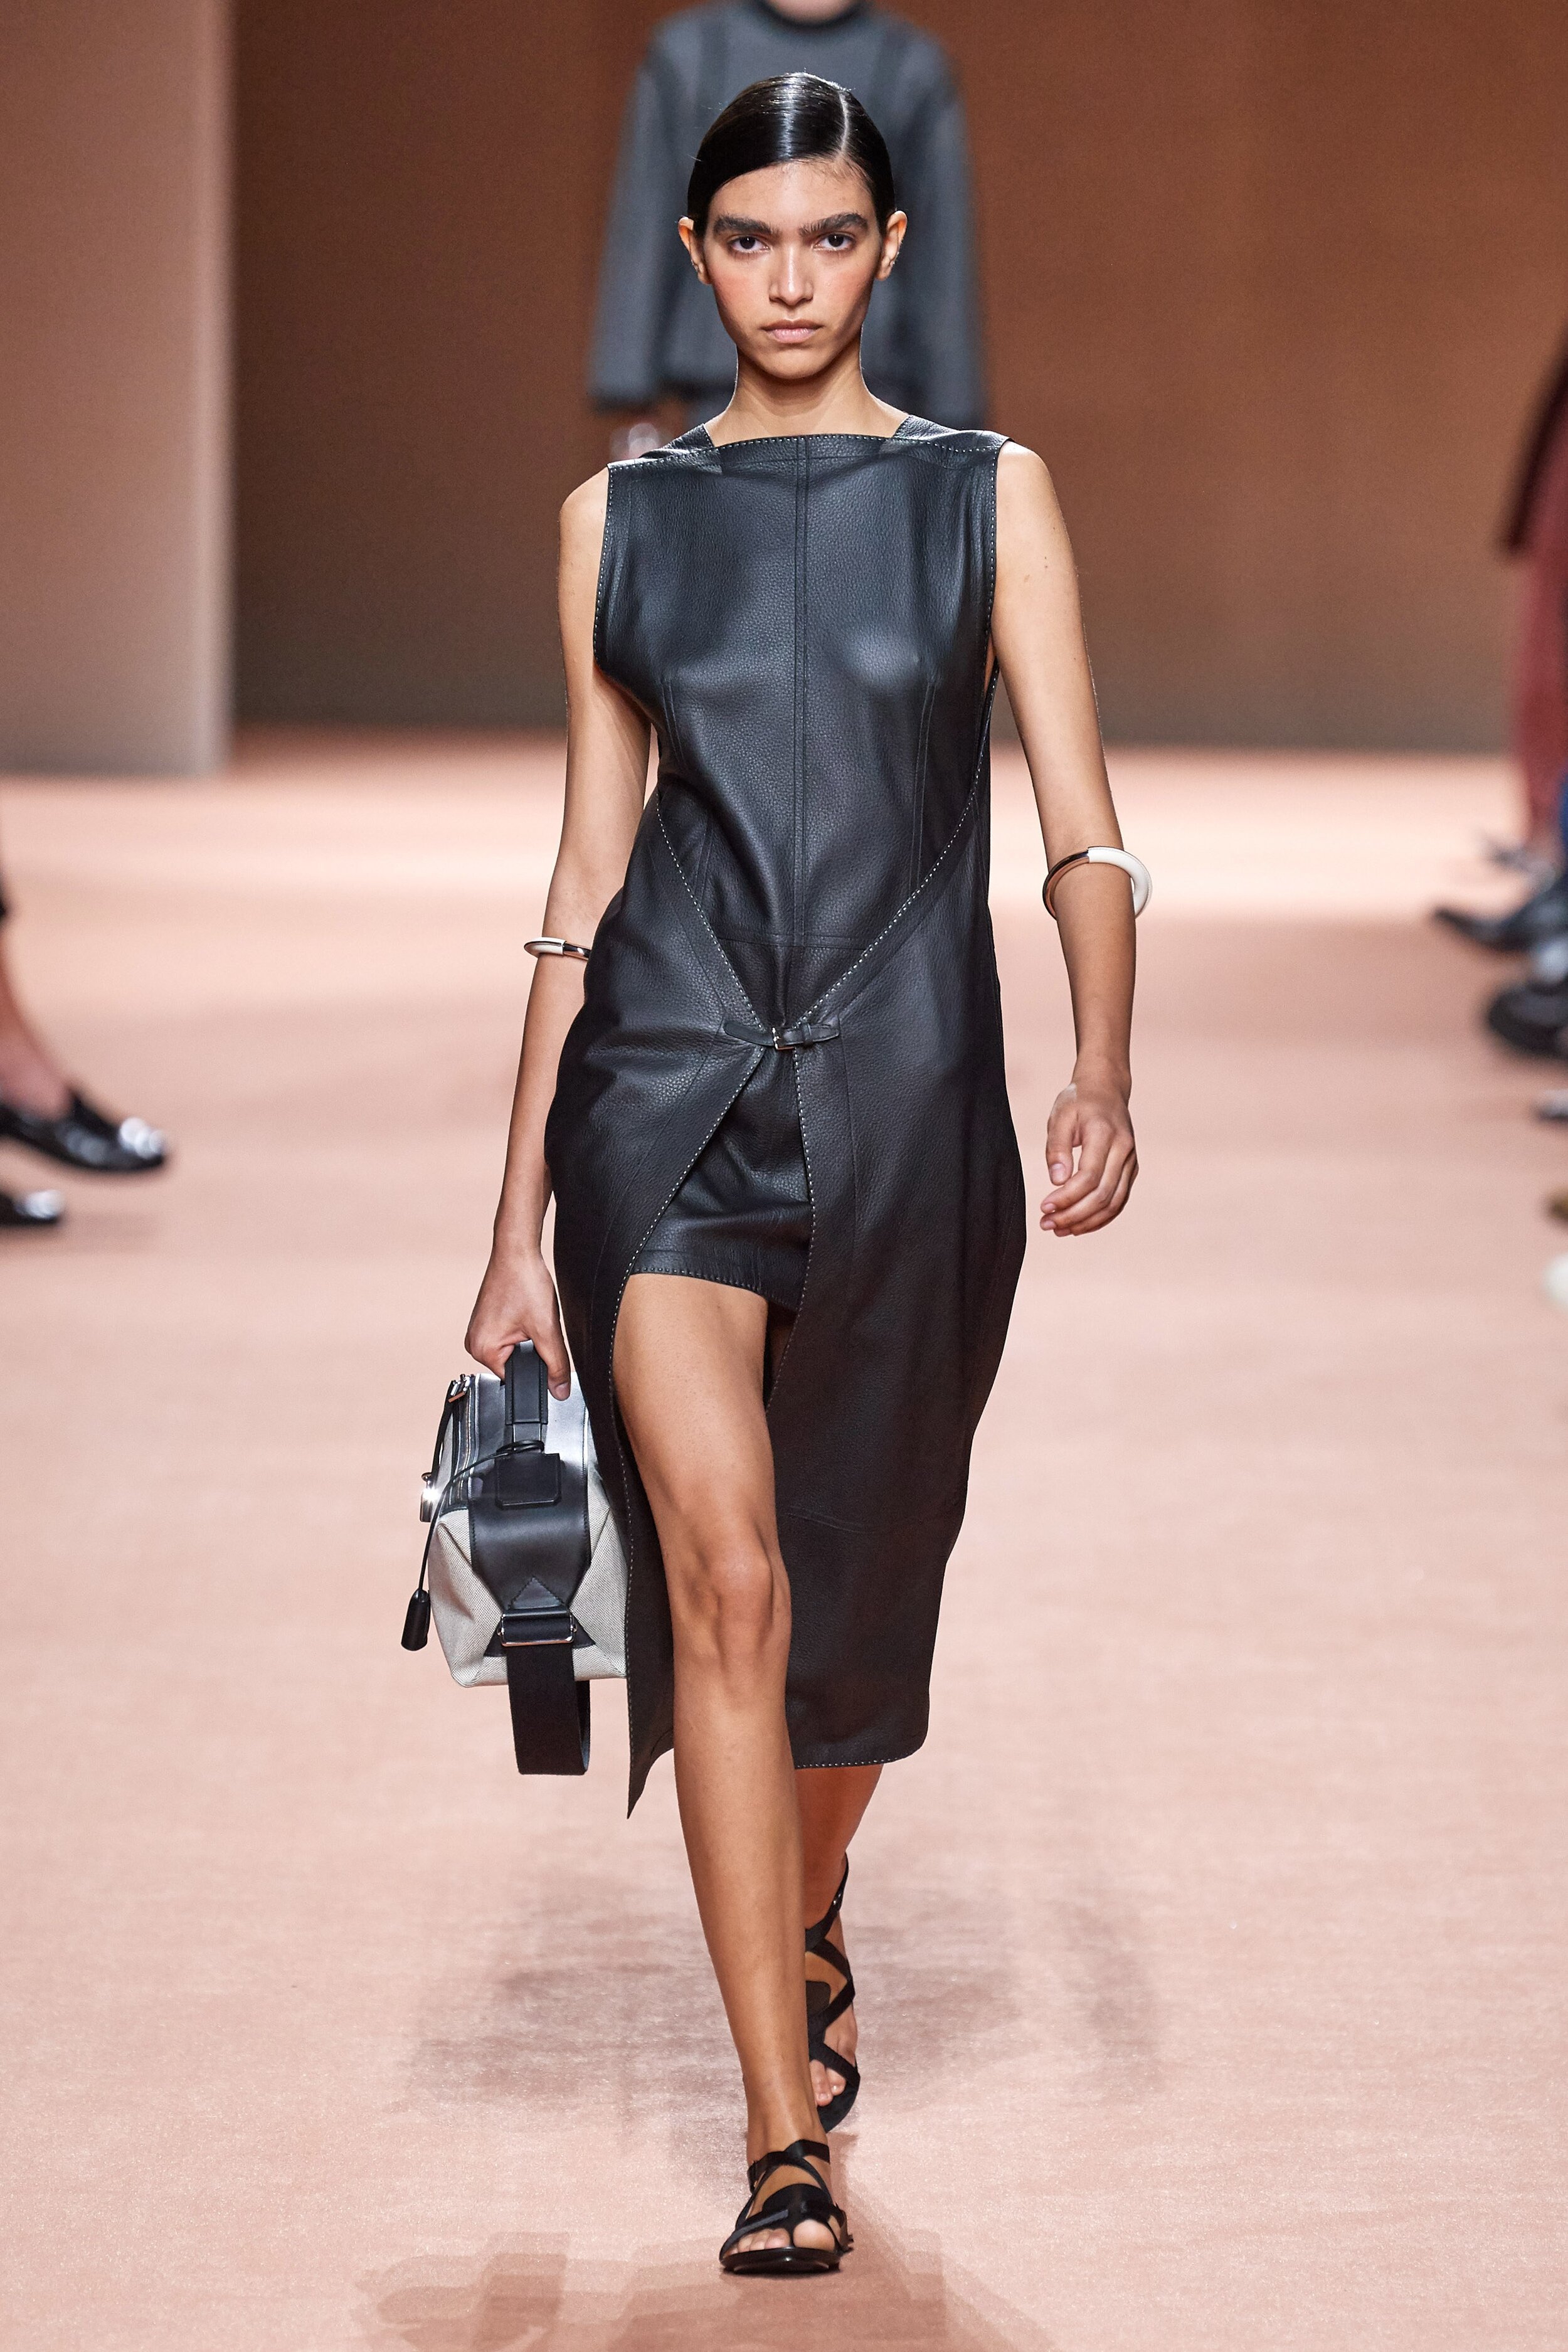 Paris Fashion Week: desfile Primavera/Verano 2019 de Louis Vuitton - Foto 1